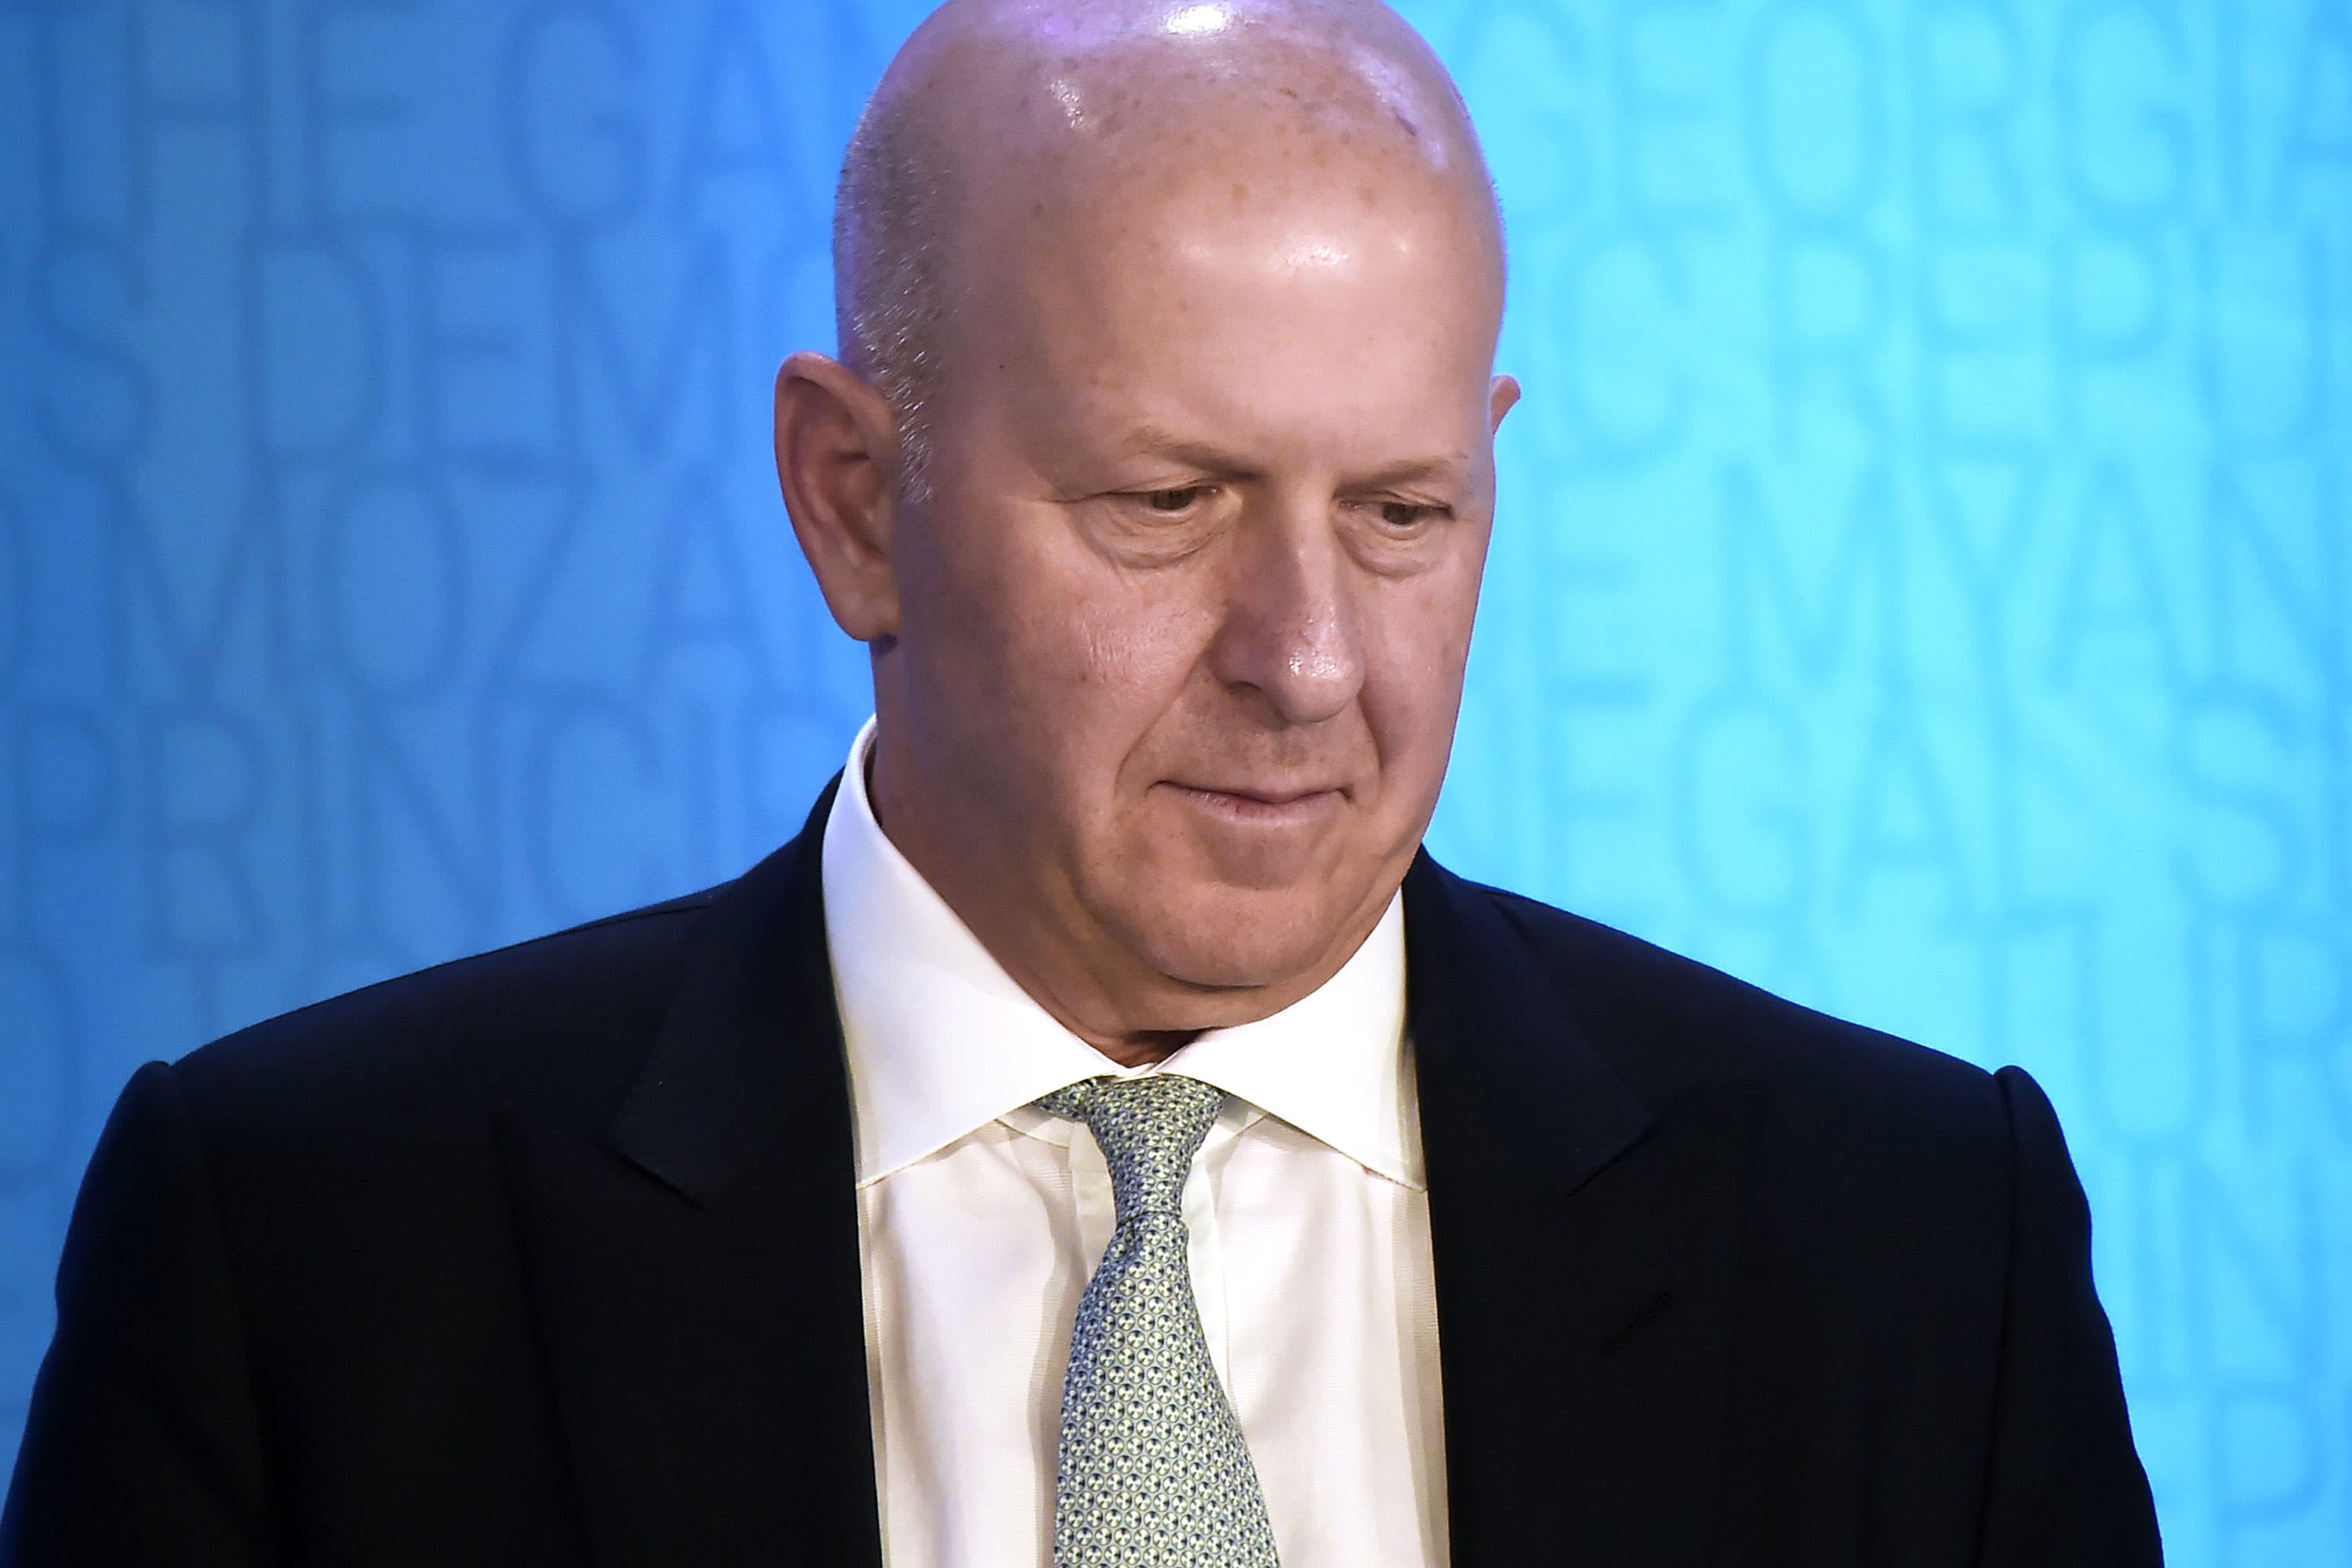 Goldman Sachs CEO David Solomon gets $ 10 million in savings on more than $ 1 million